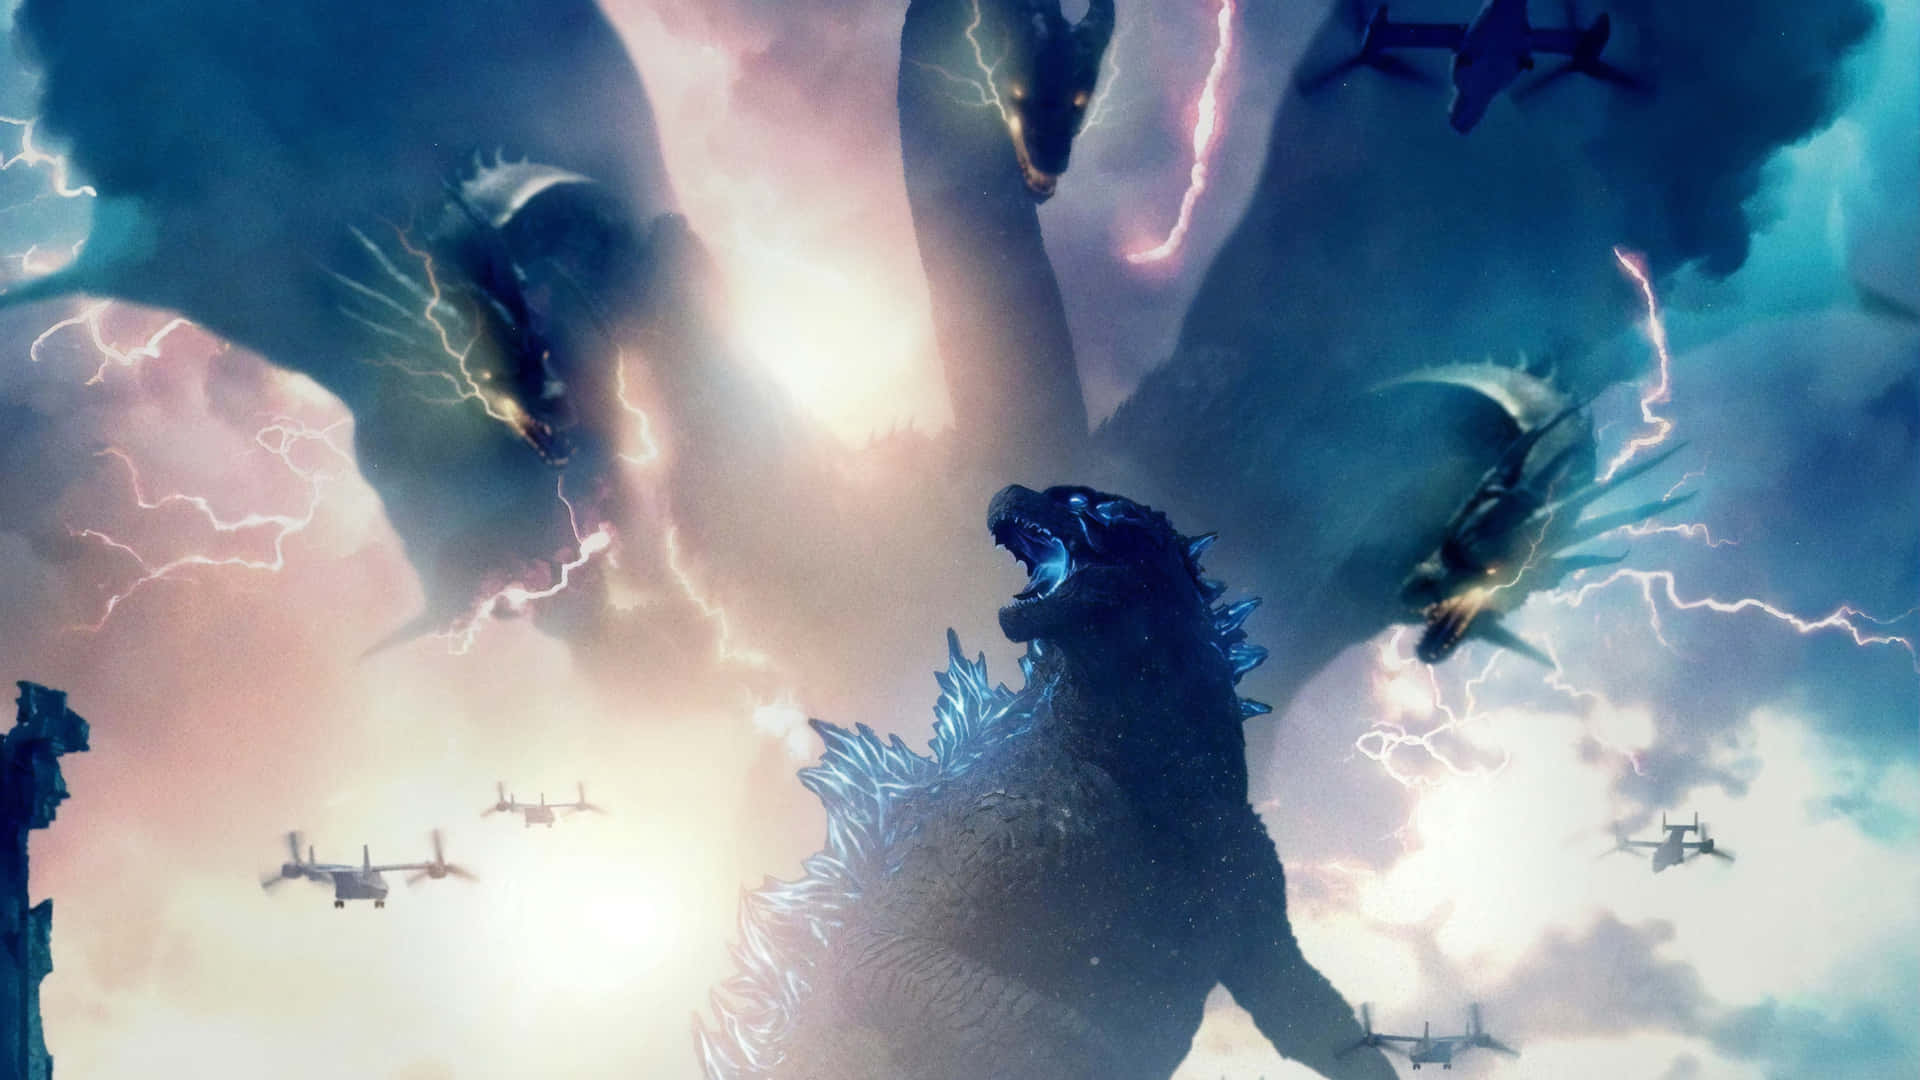 Epic Battle of Titans - Godzilla Vs King Ghidorah Wallpaper